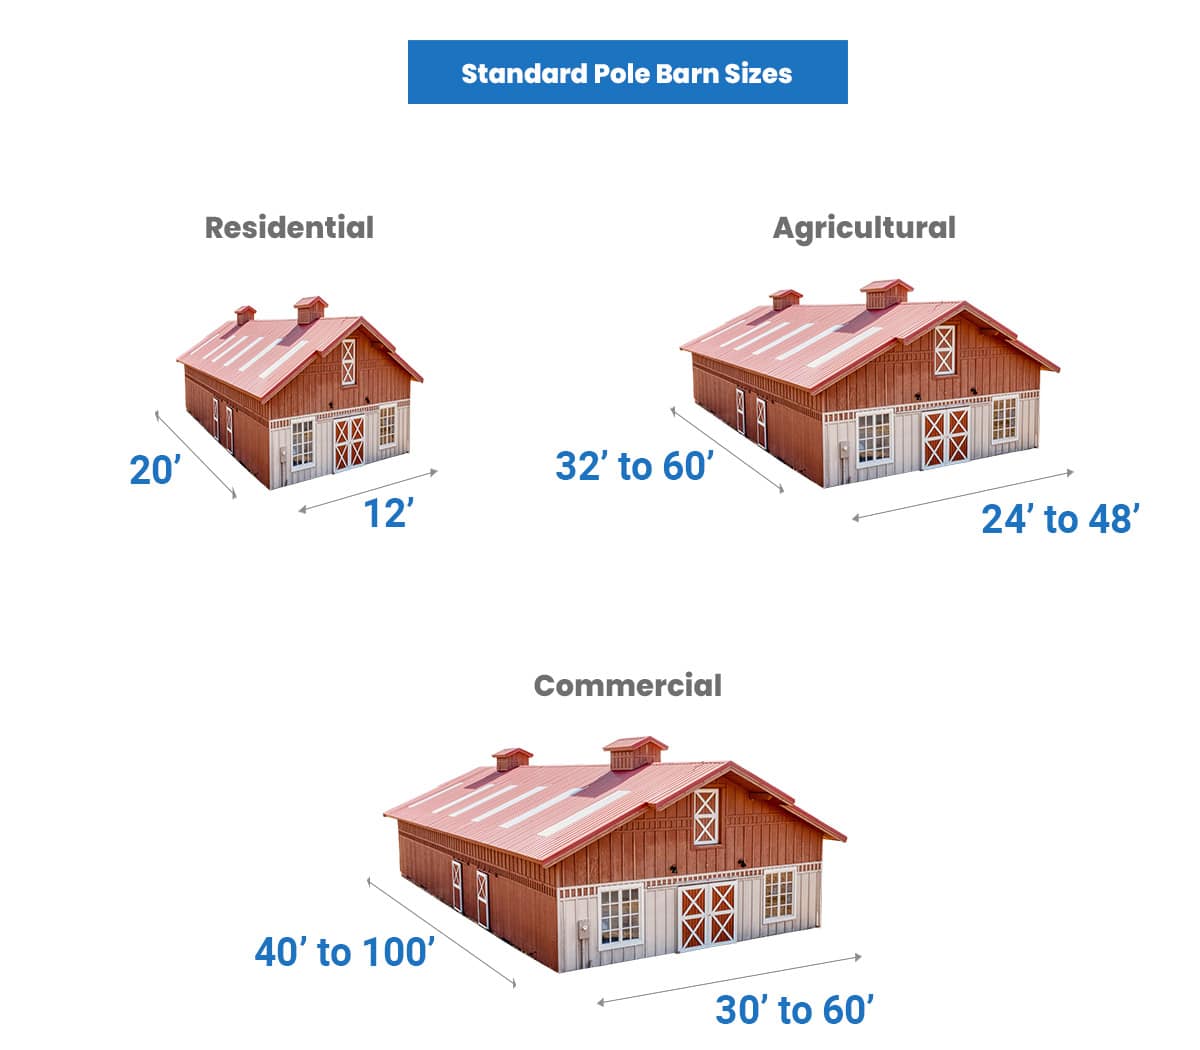 Standard pole-barn sizes